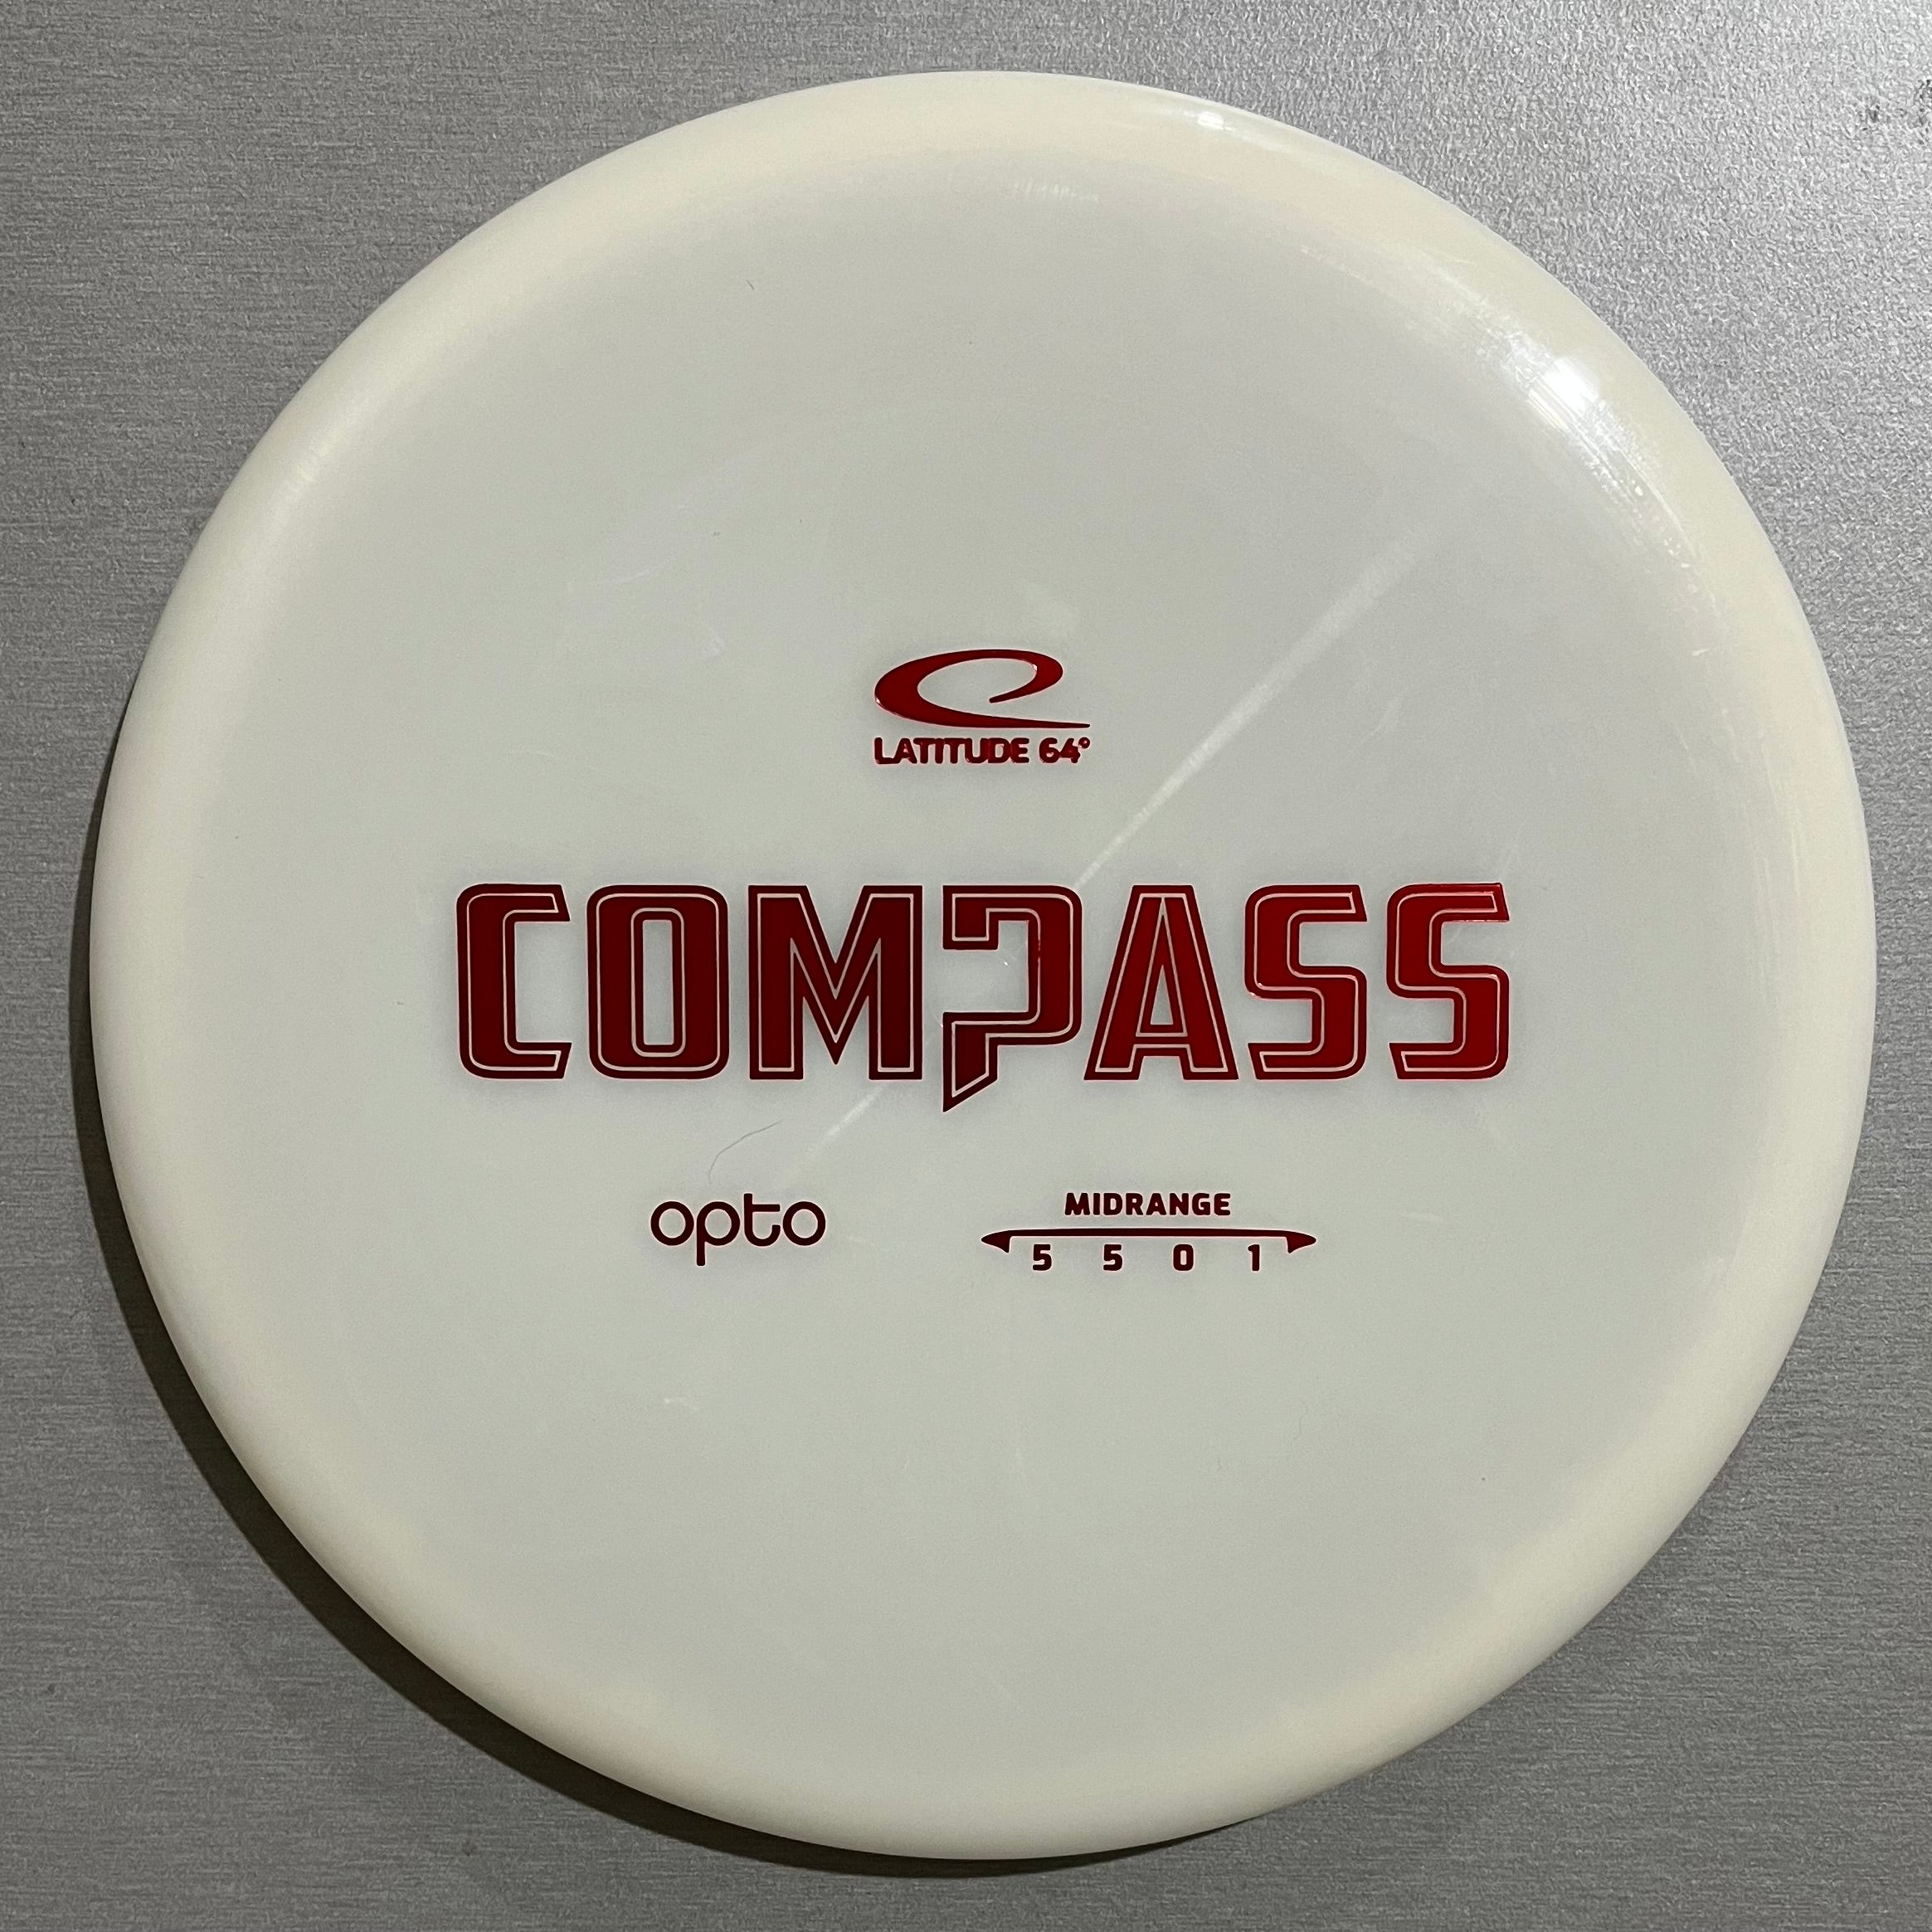 Latitude 64 Compass Opto - Mid Range Disc - Sportinglife Turangi 